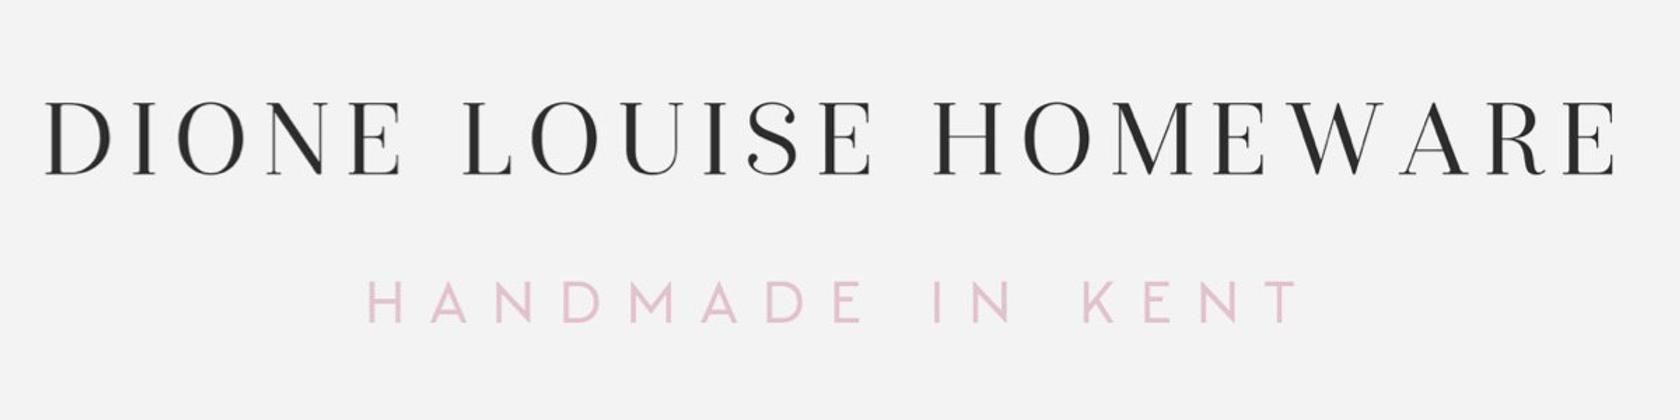 Dione Louise Homeware logo